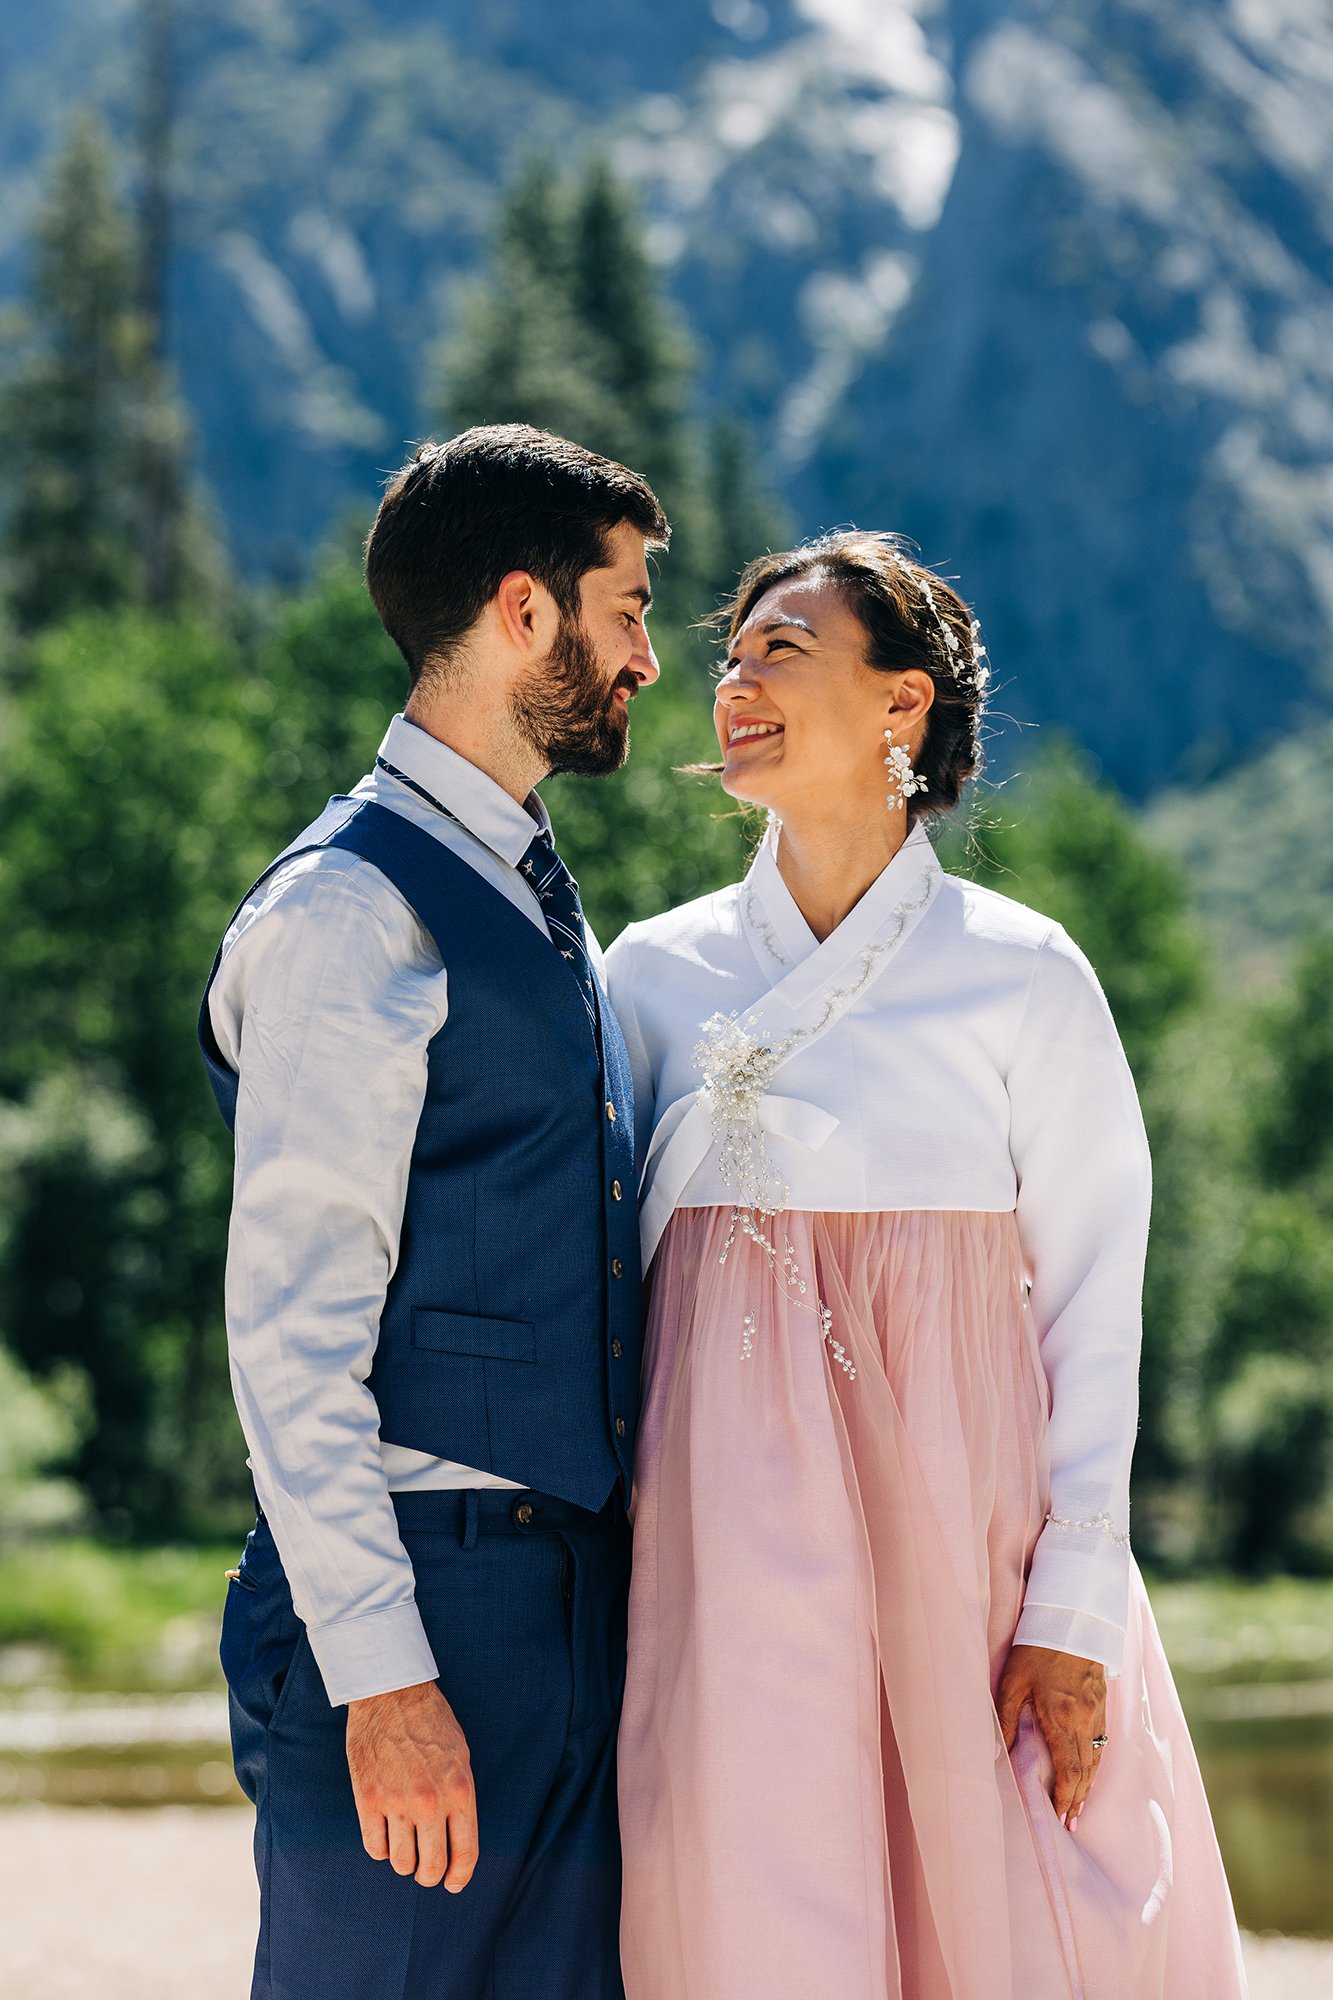 Yooree and Jarrod lock eyes during their elopement in Yosemite National Park, California.